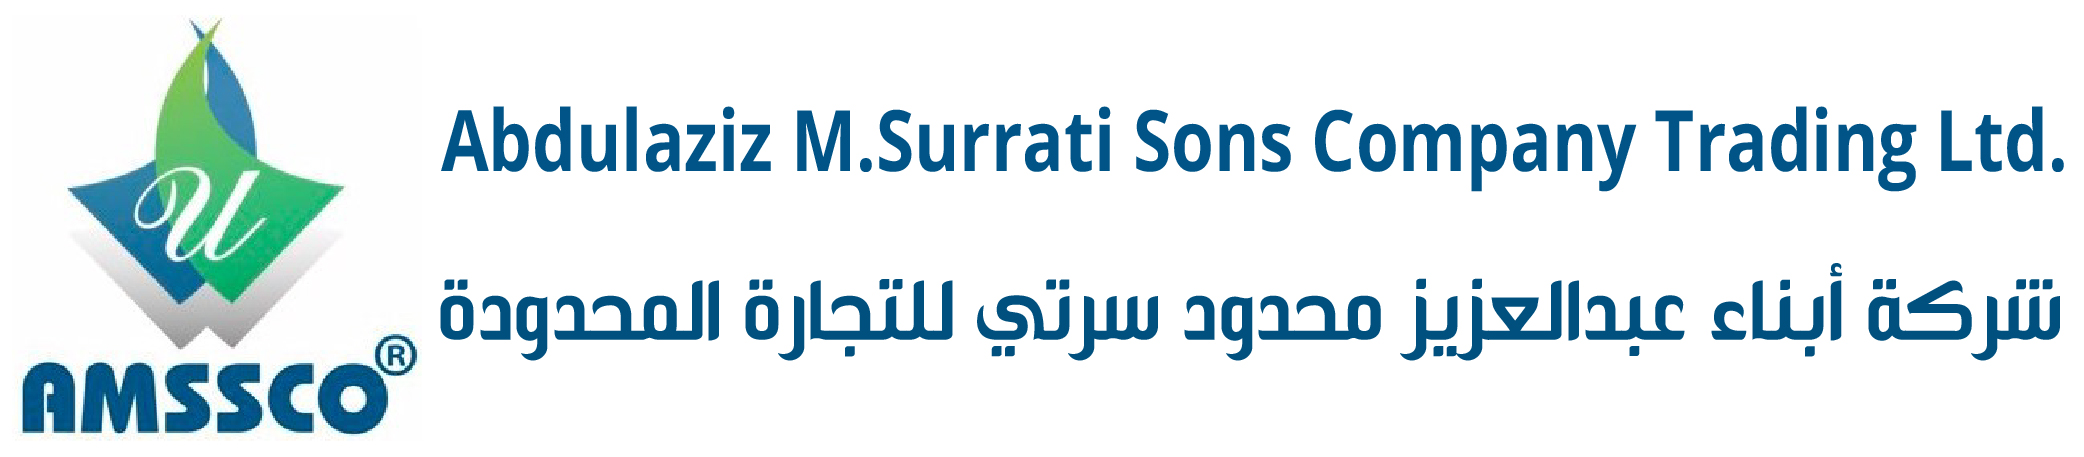 Abdulaziz M Surrati Sons Company Trading Ltd.